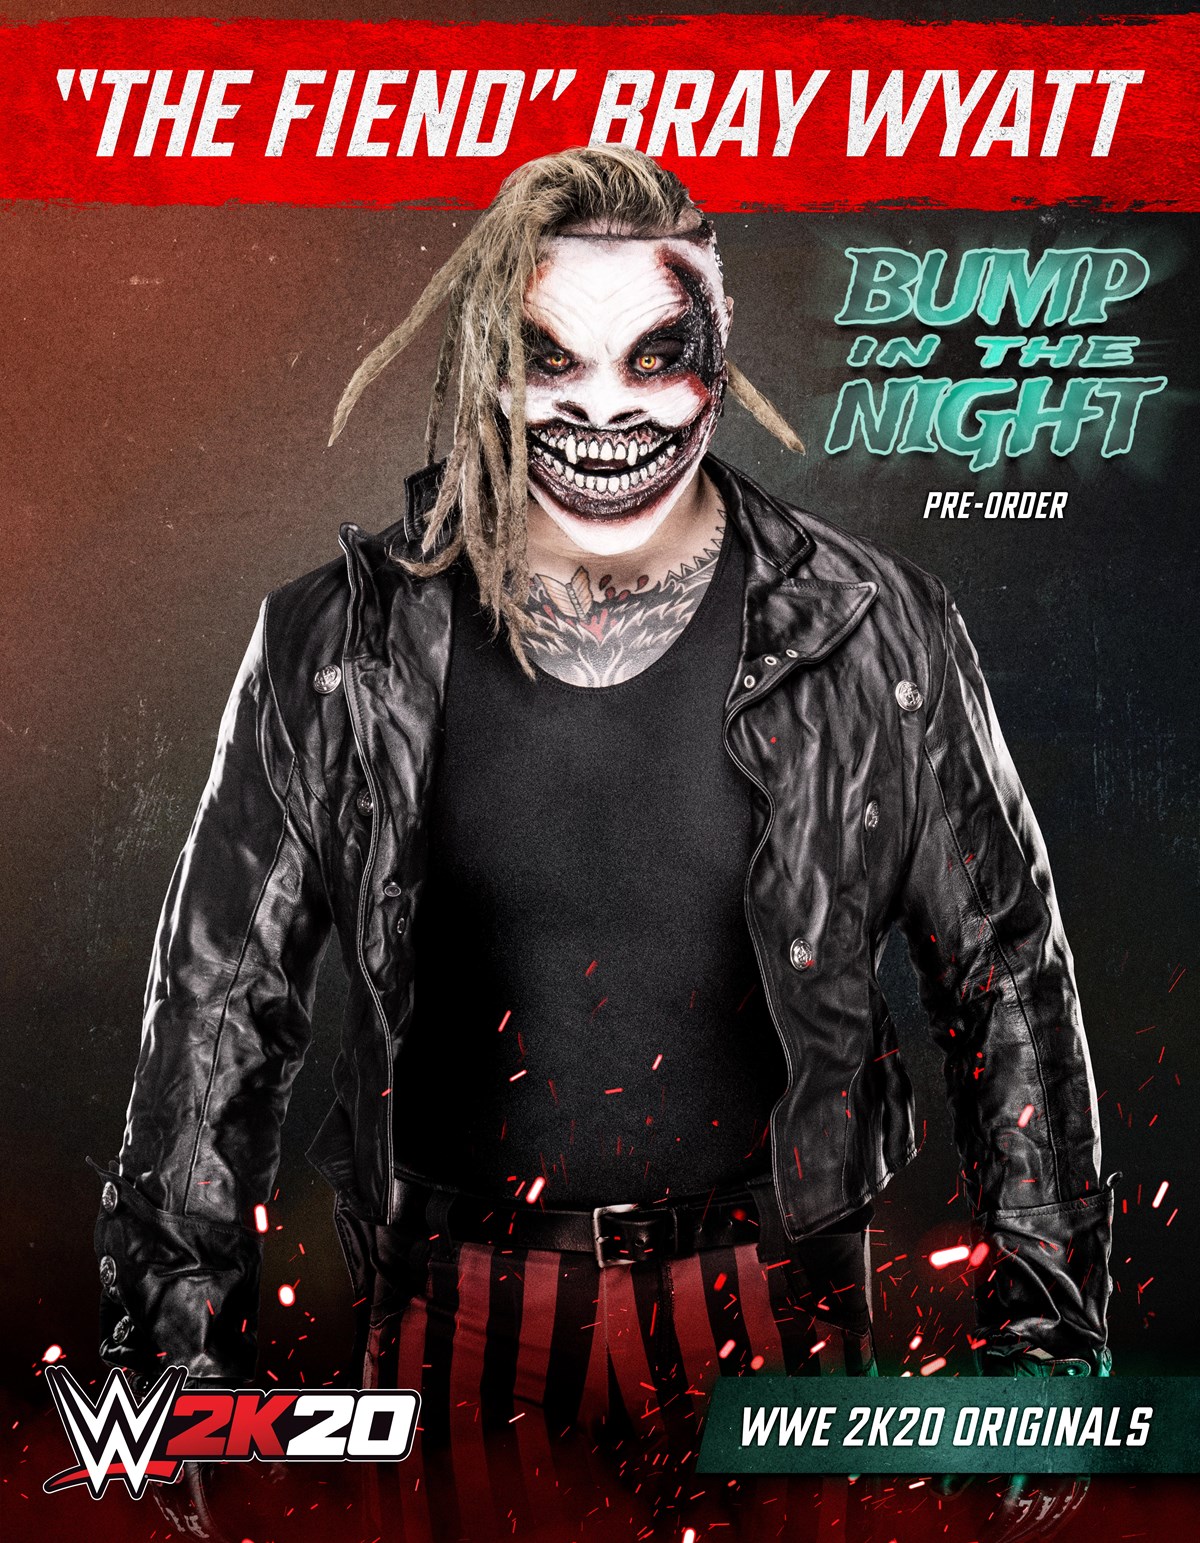 WWE2K20 Originals Bump in the Night Bray Wyatt